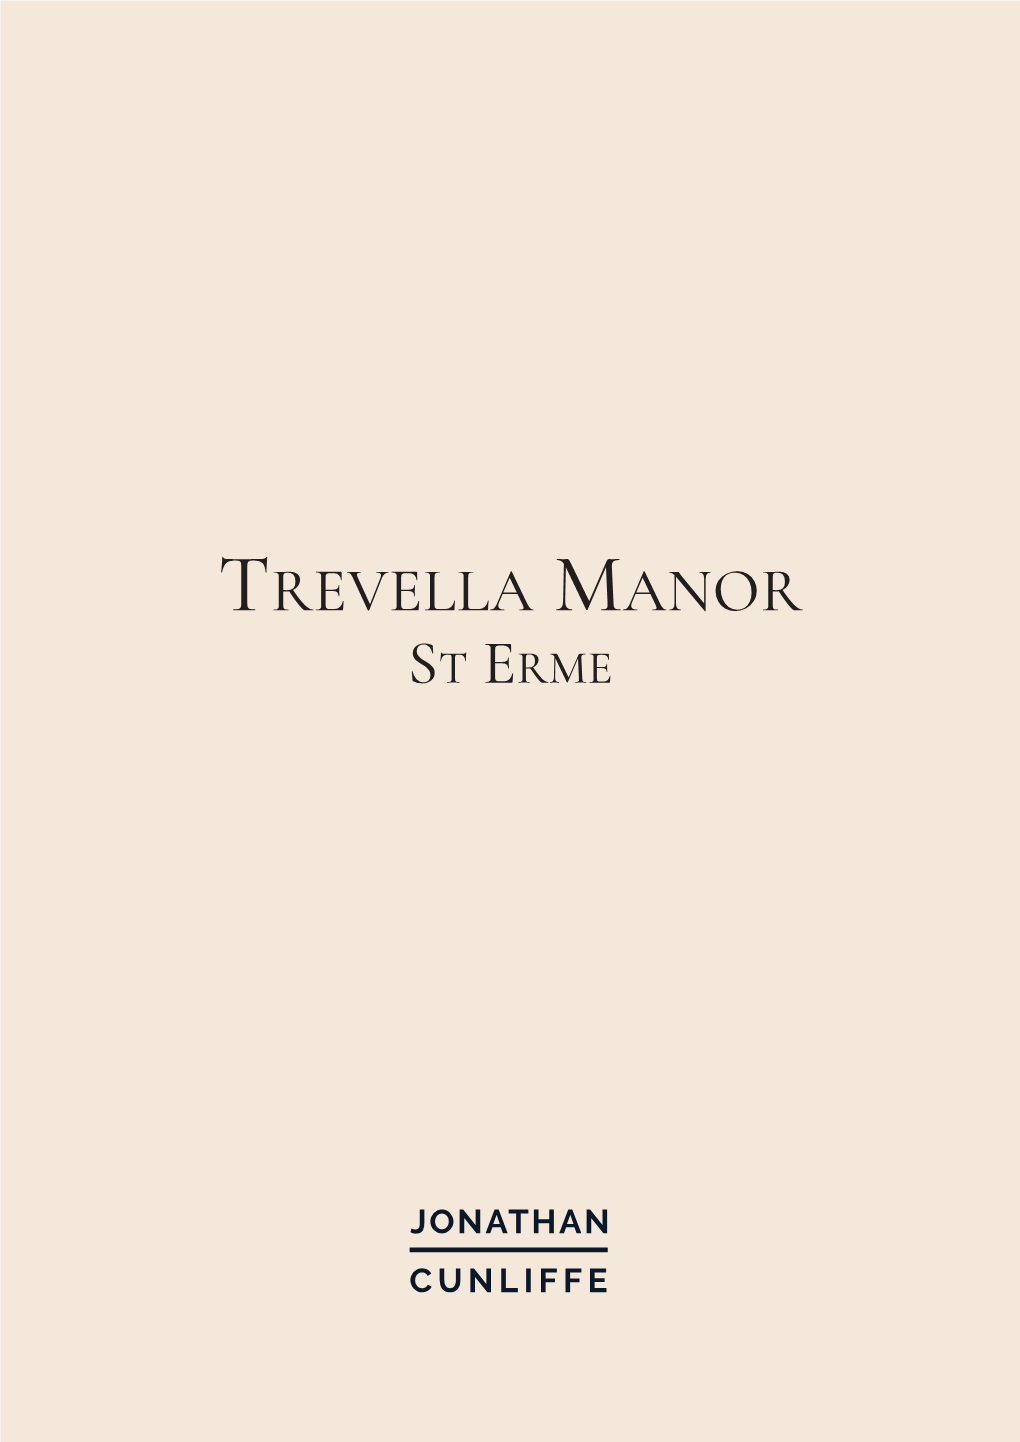 Trevella Manor St Erme